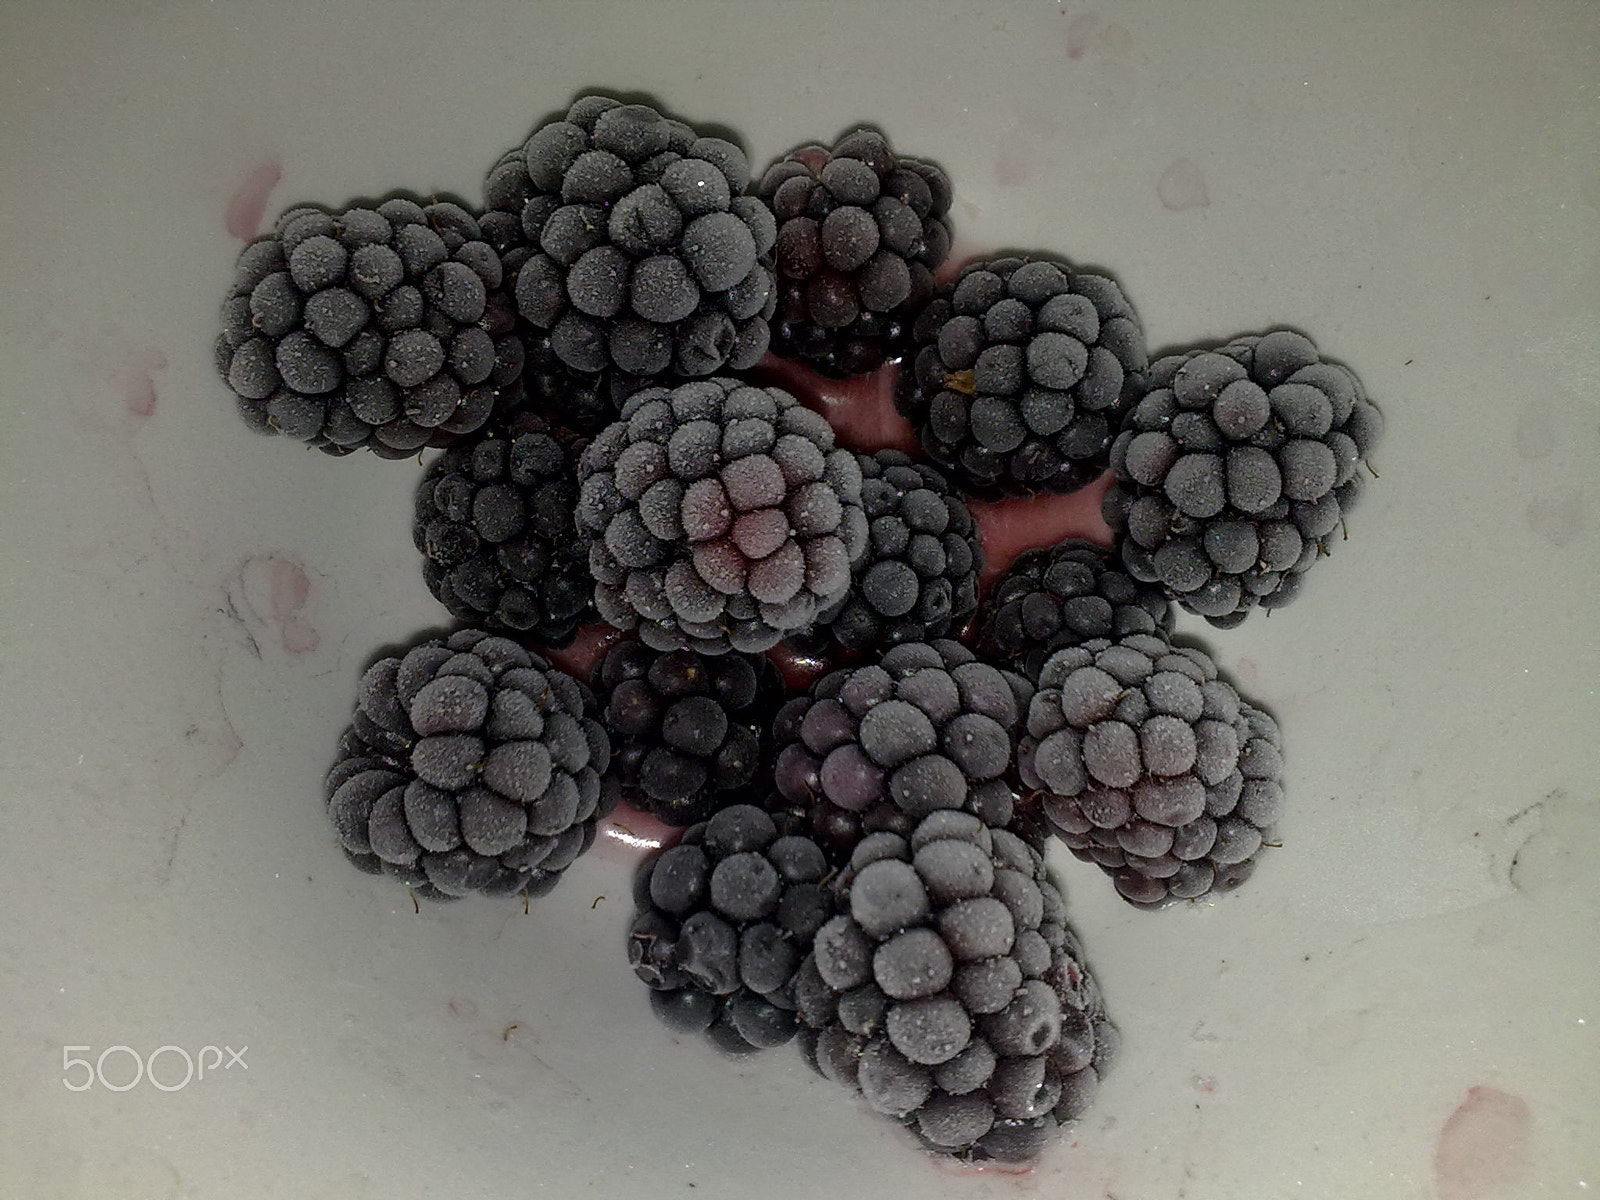 Nokia 5800 Xpres sample photo. Frozen berries photography